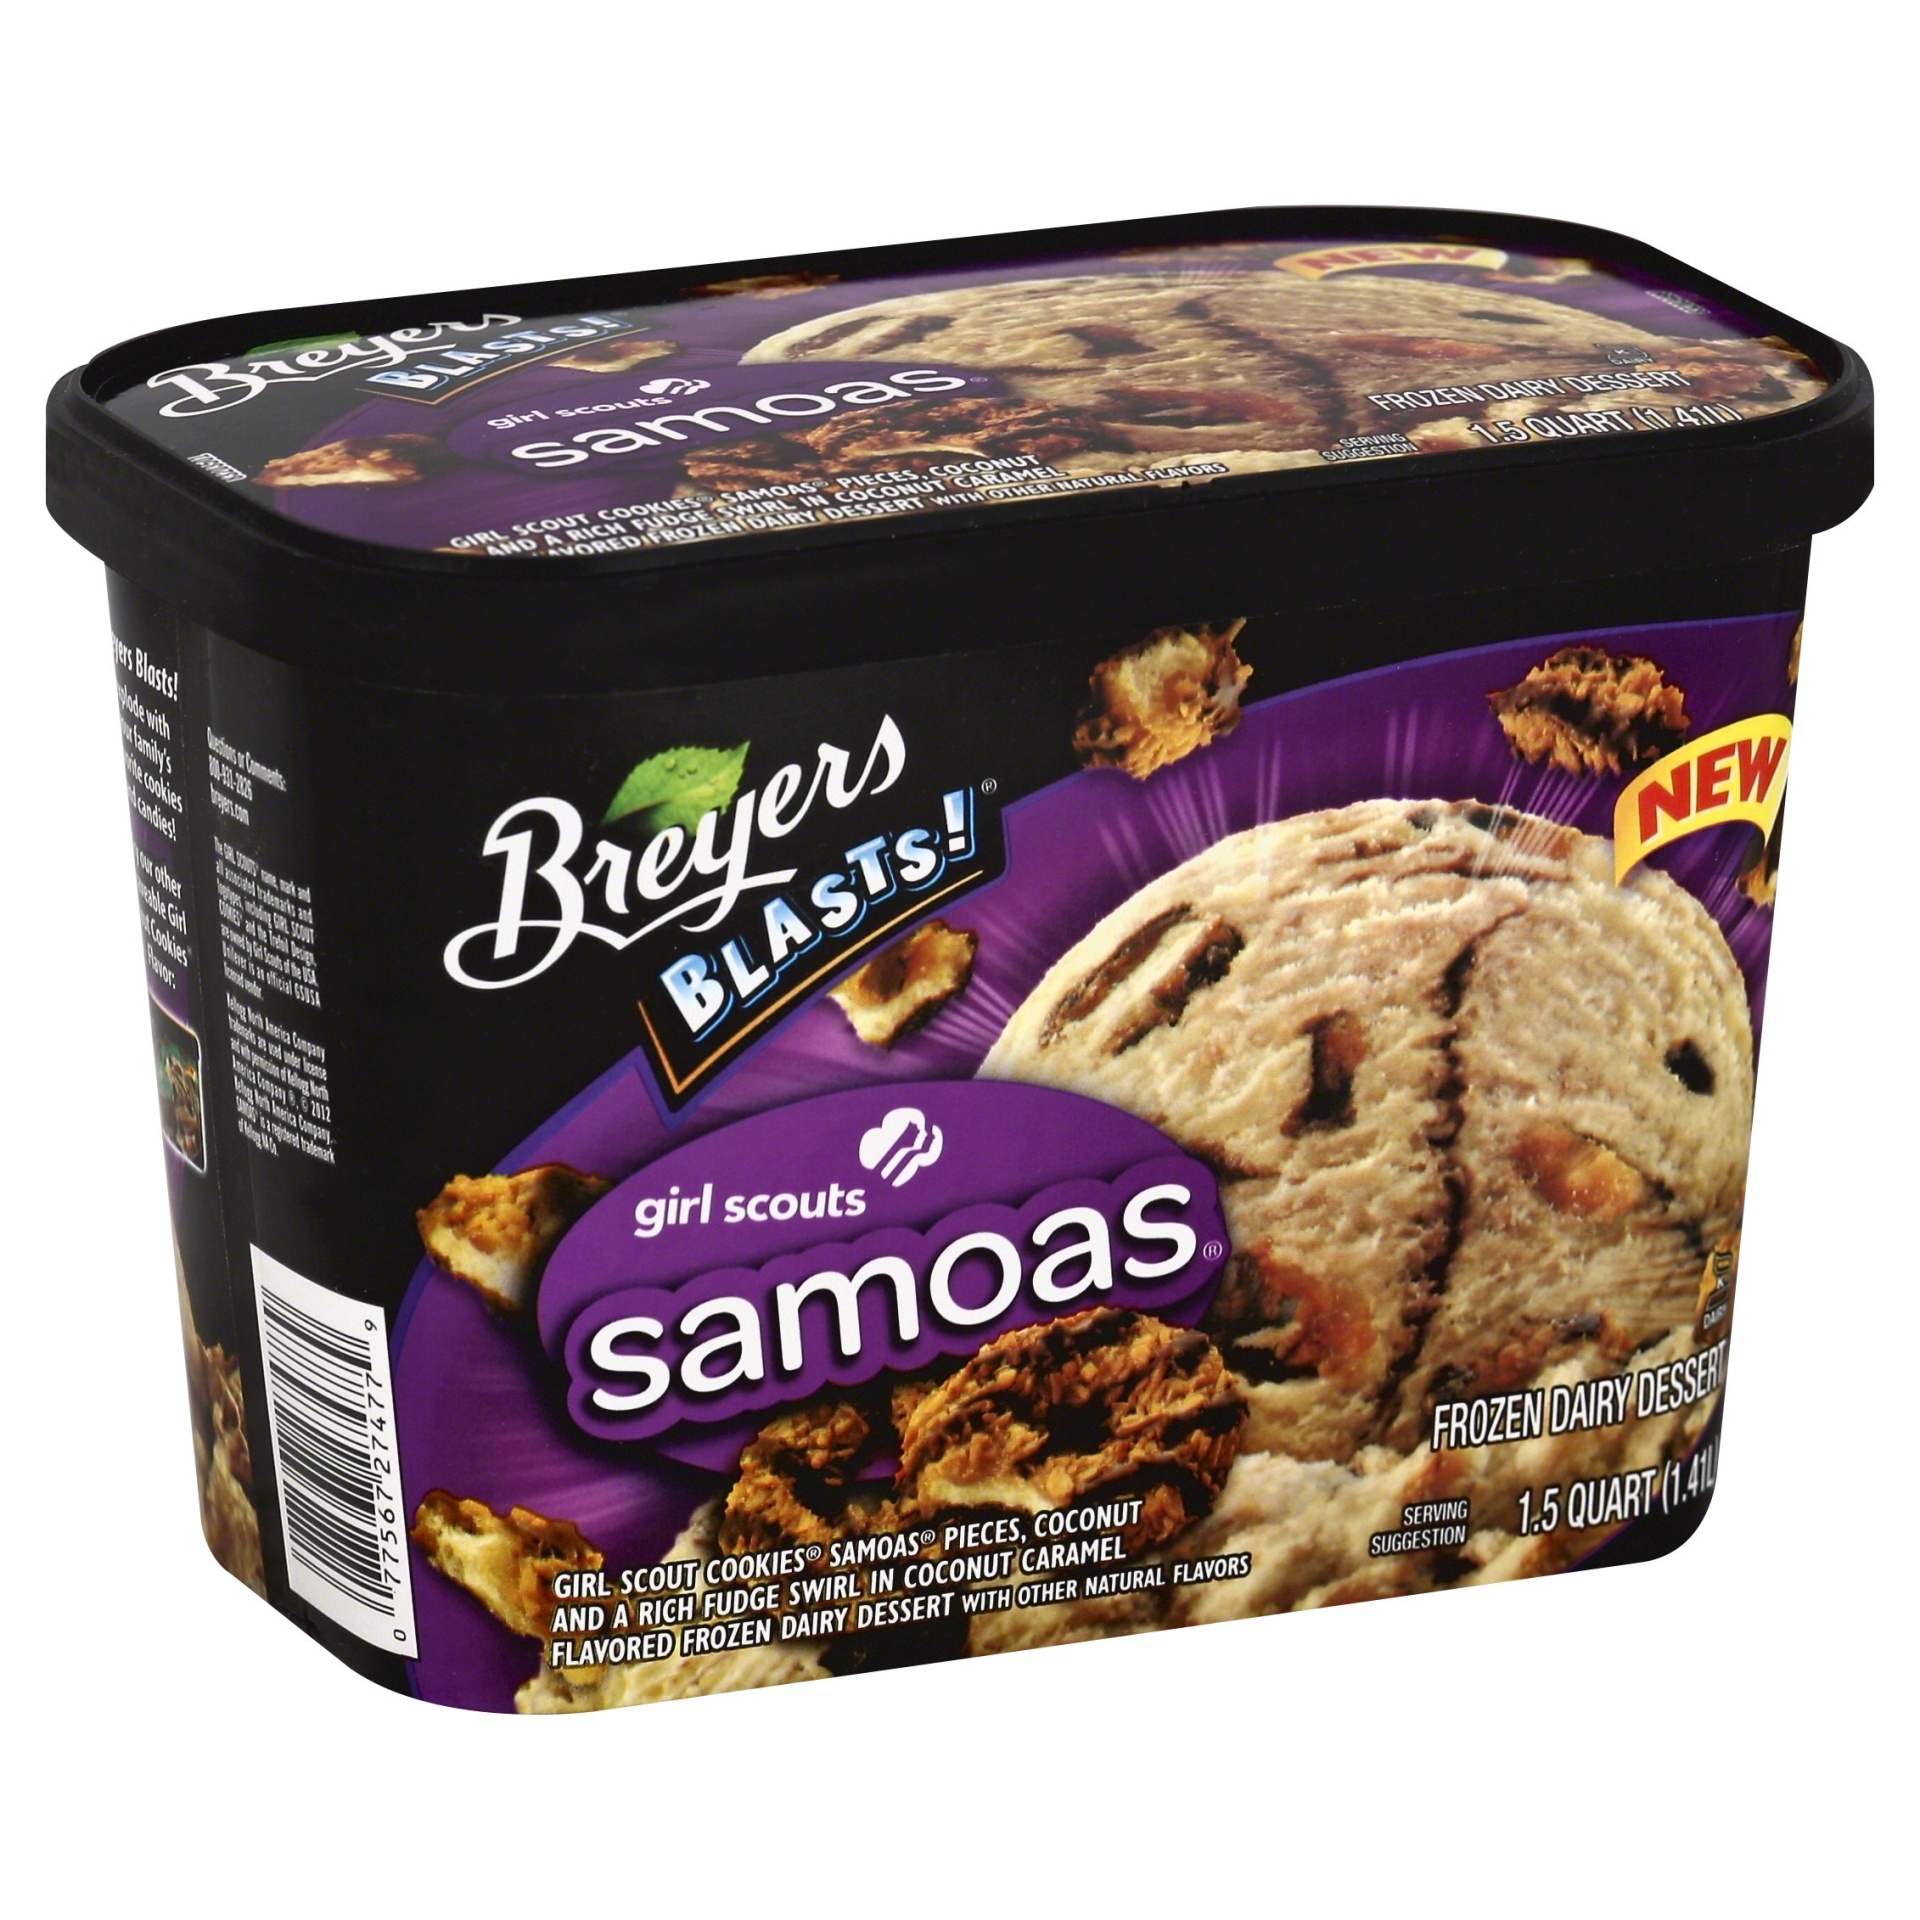 slide 1 of 4, Breyer's Blasts Girl Scouts Samoas Frozen Dairy Dessert, 48 oz